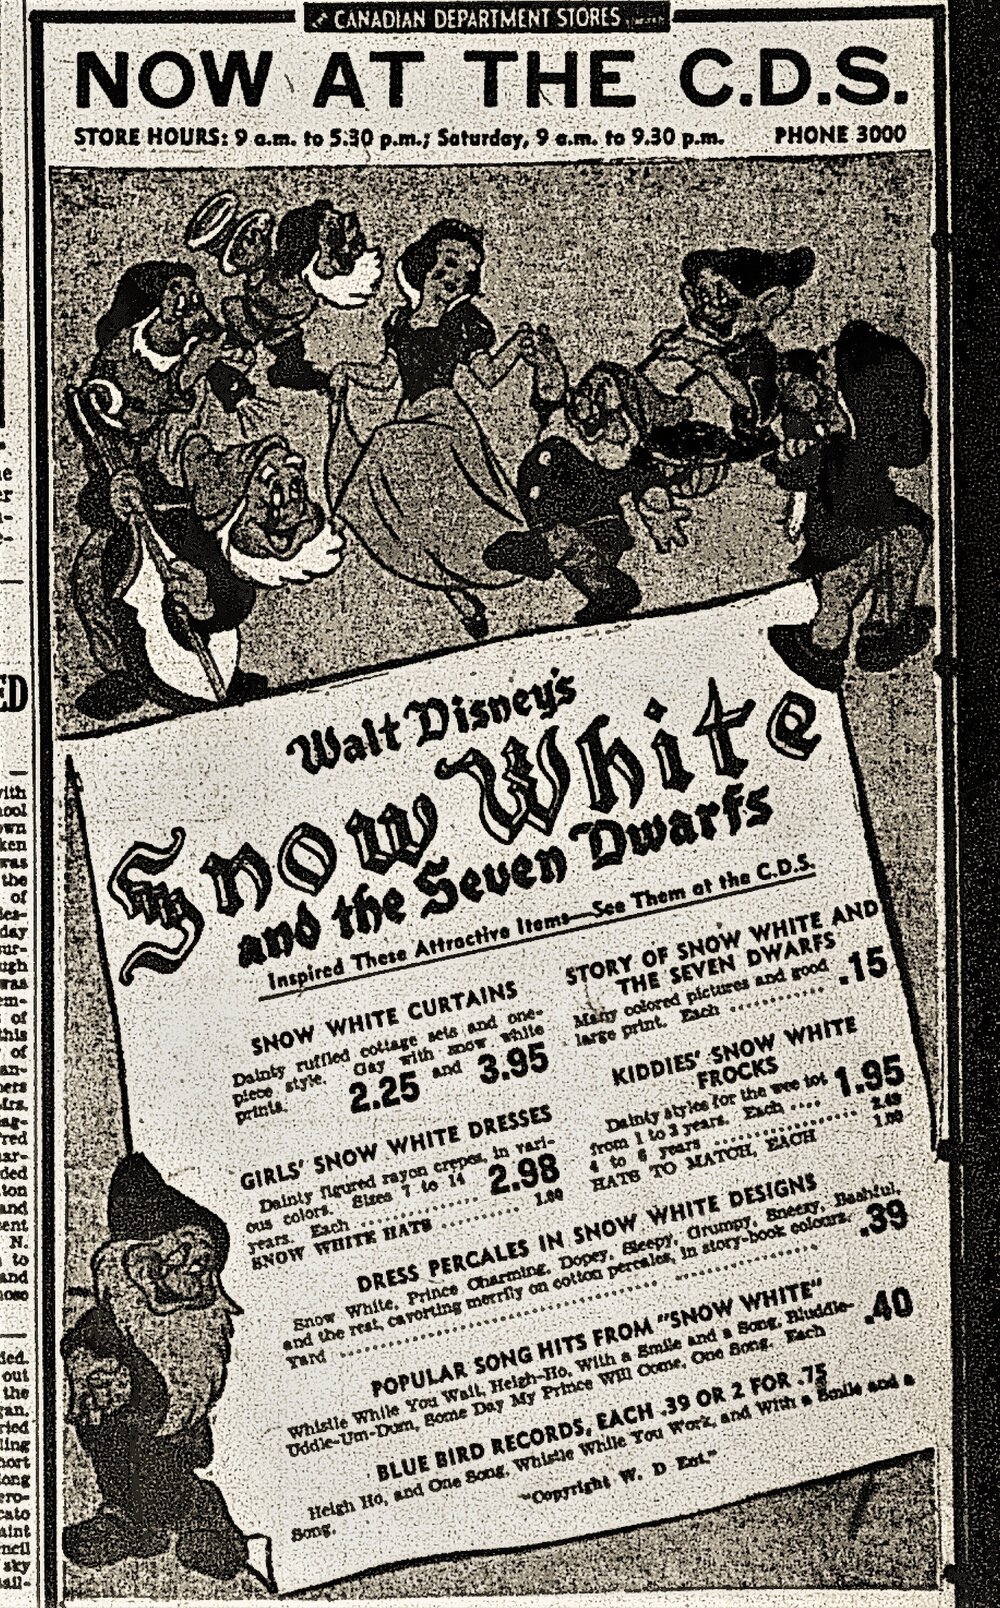 1938 April 4 p14 Snow White CDS (2).JPG